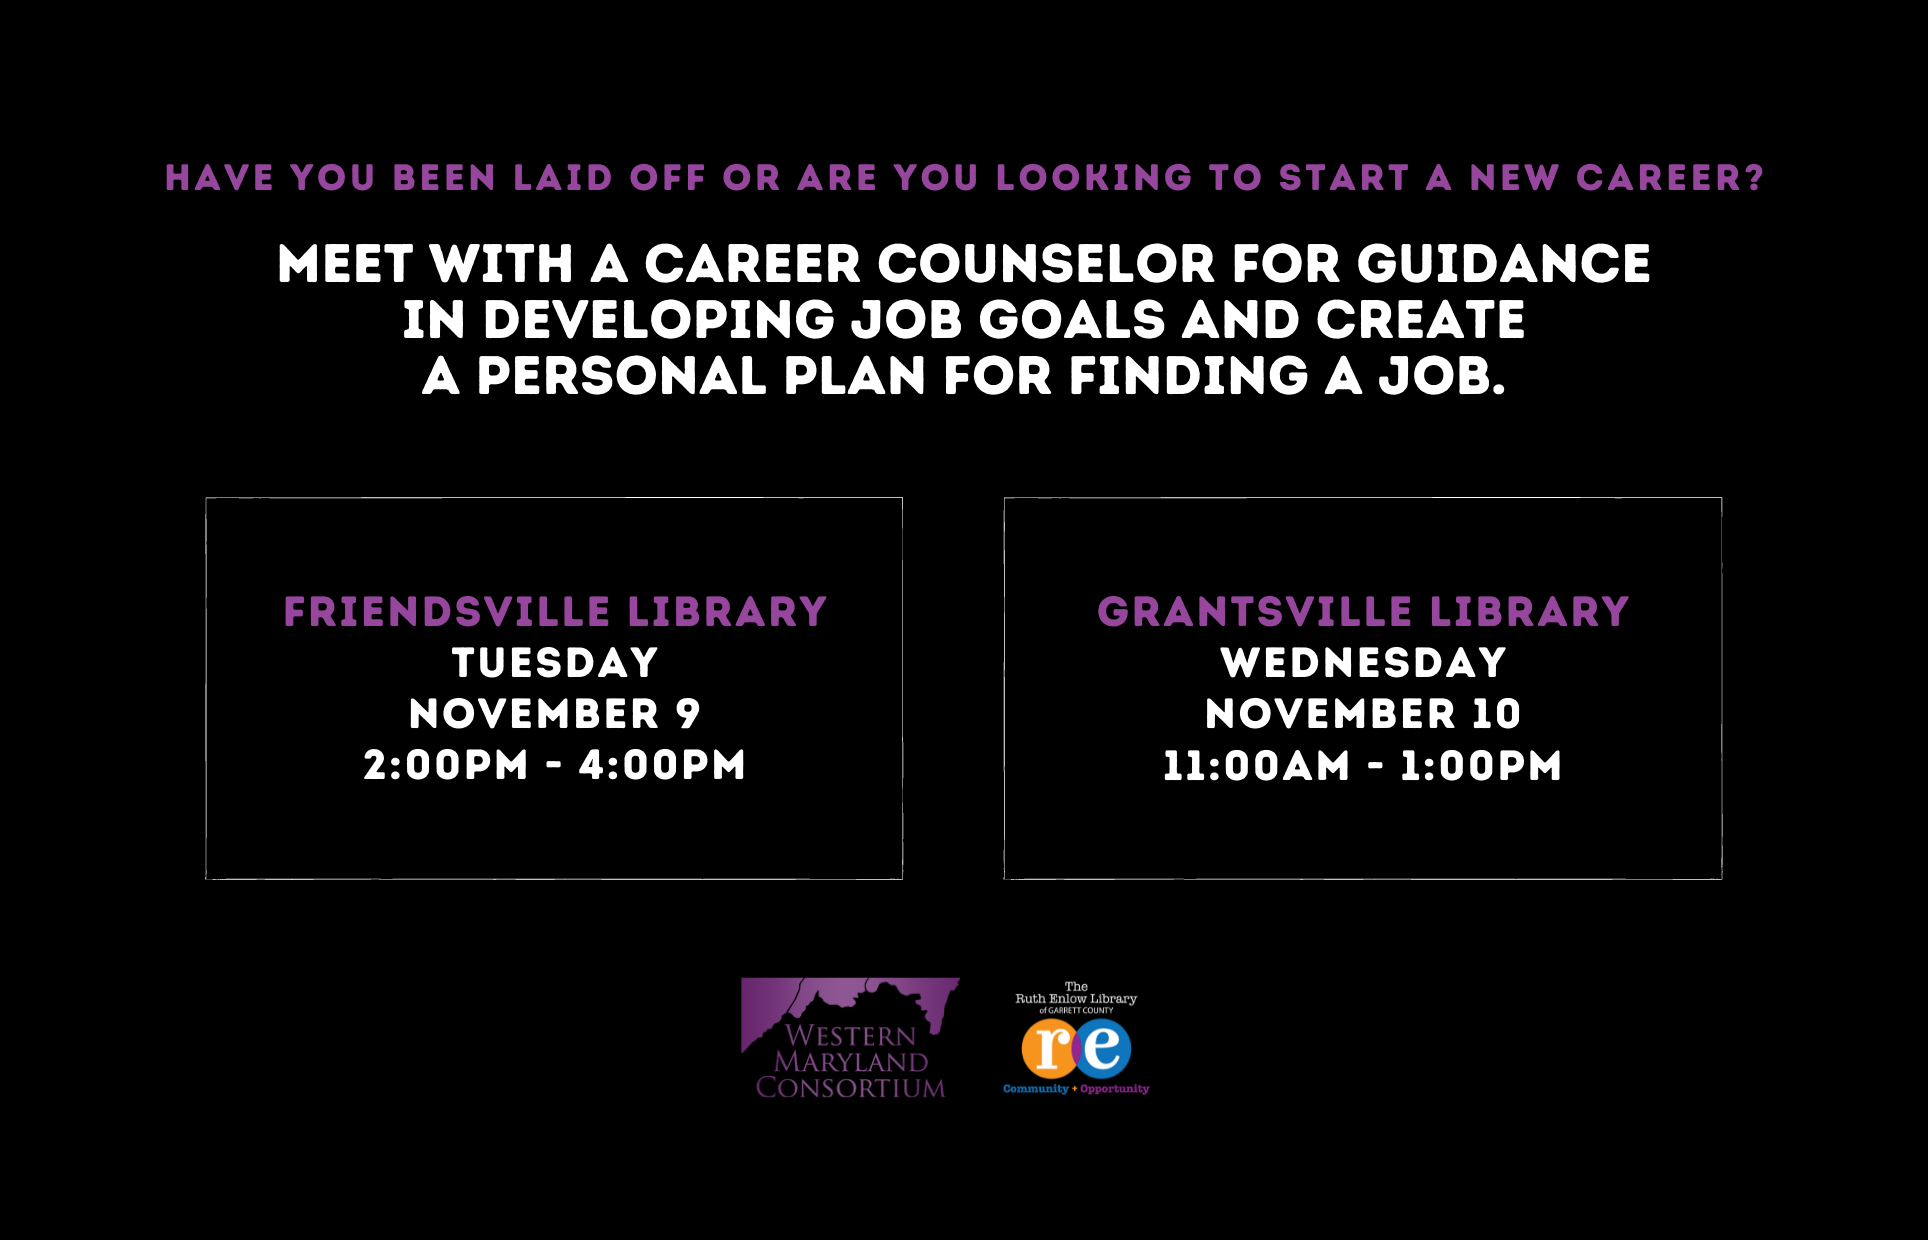 Meet with a Career Counselor Friendsville Grantsville Western Maryland Consortium